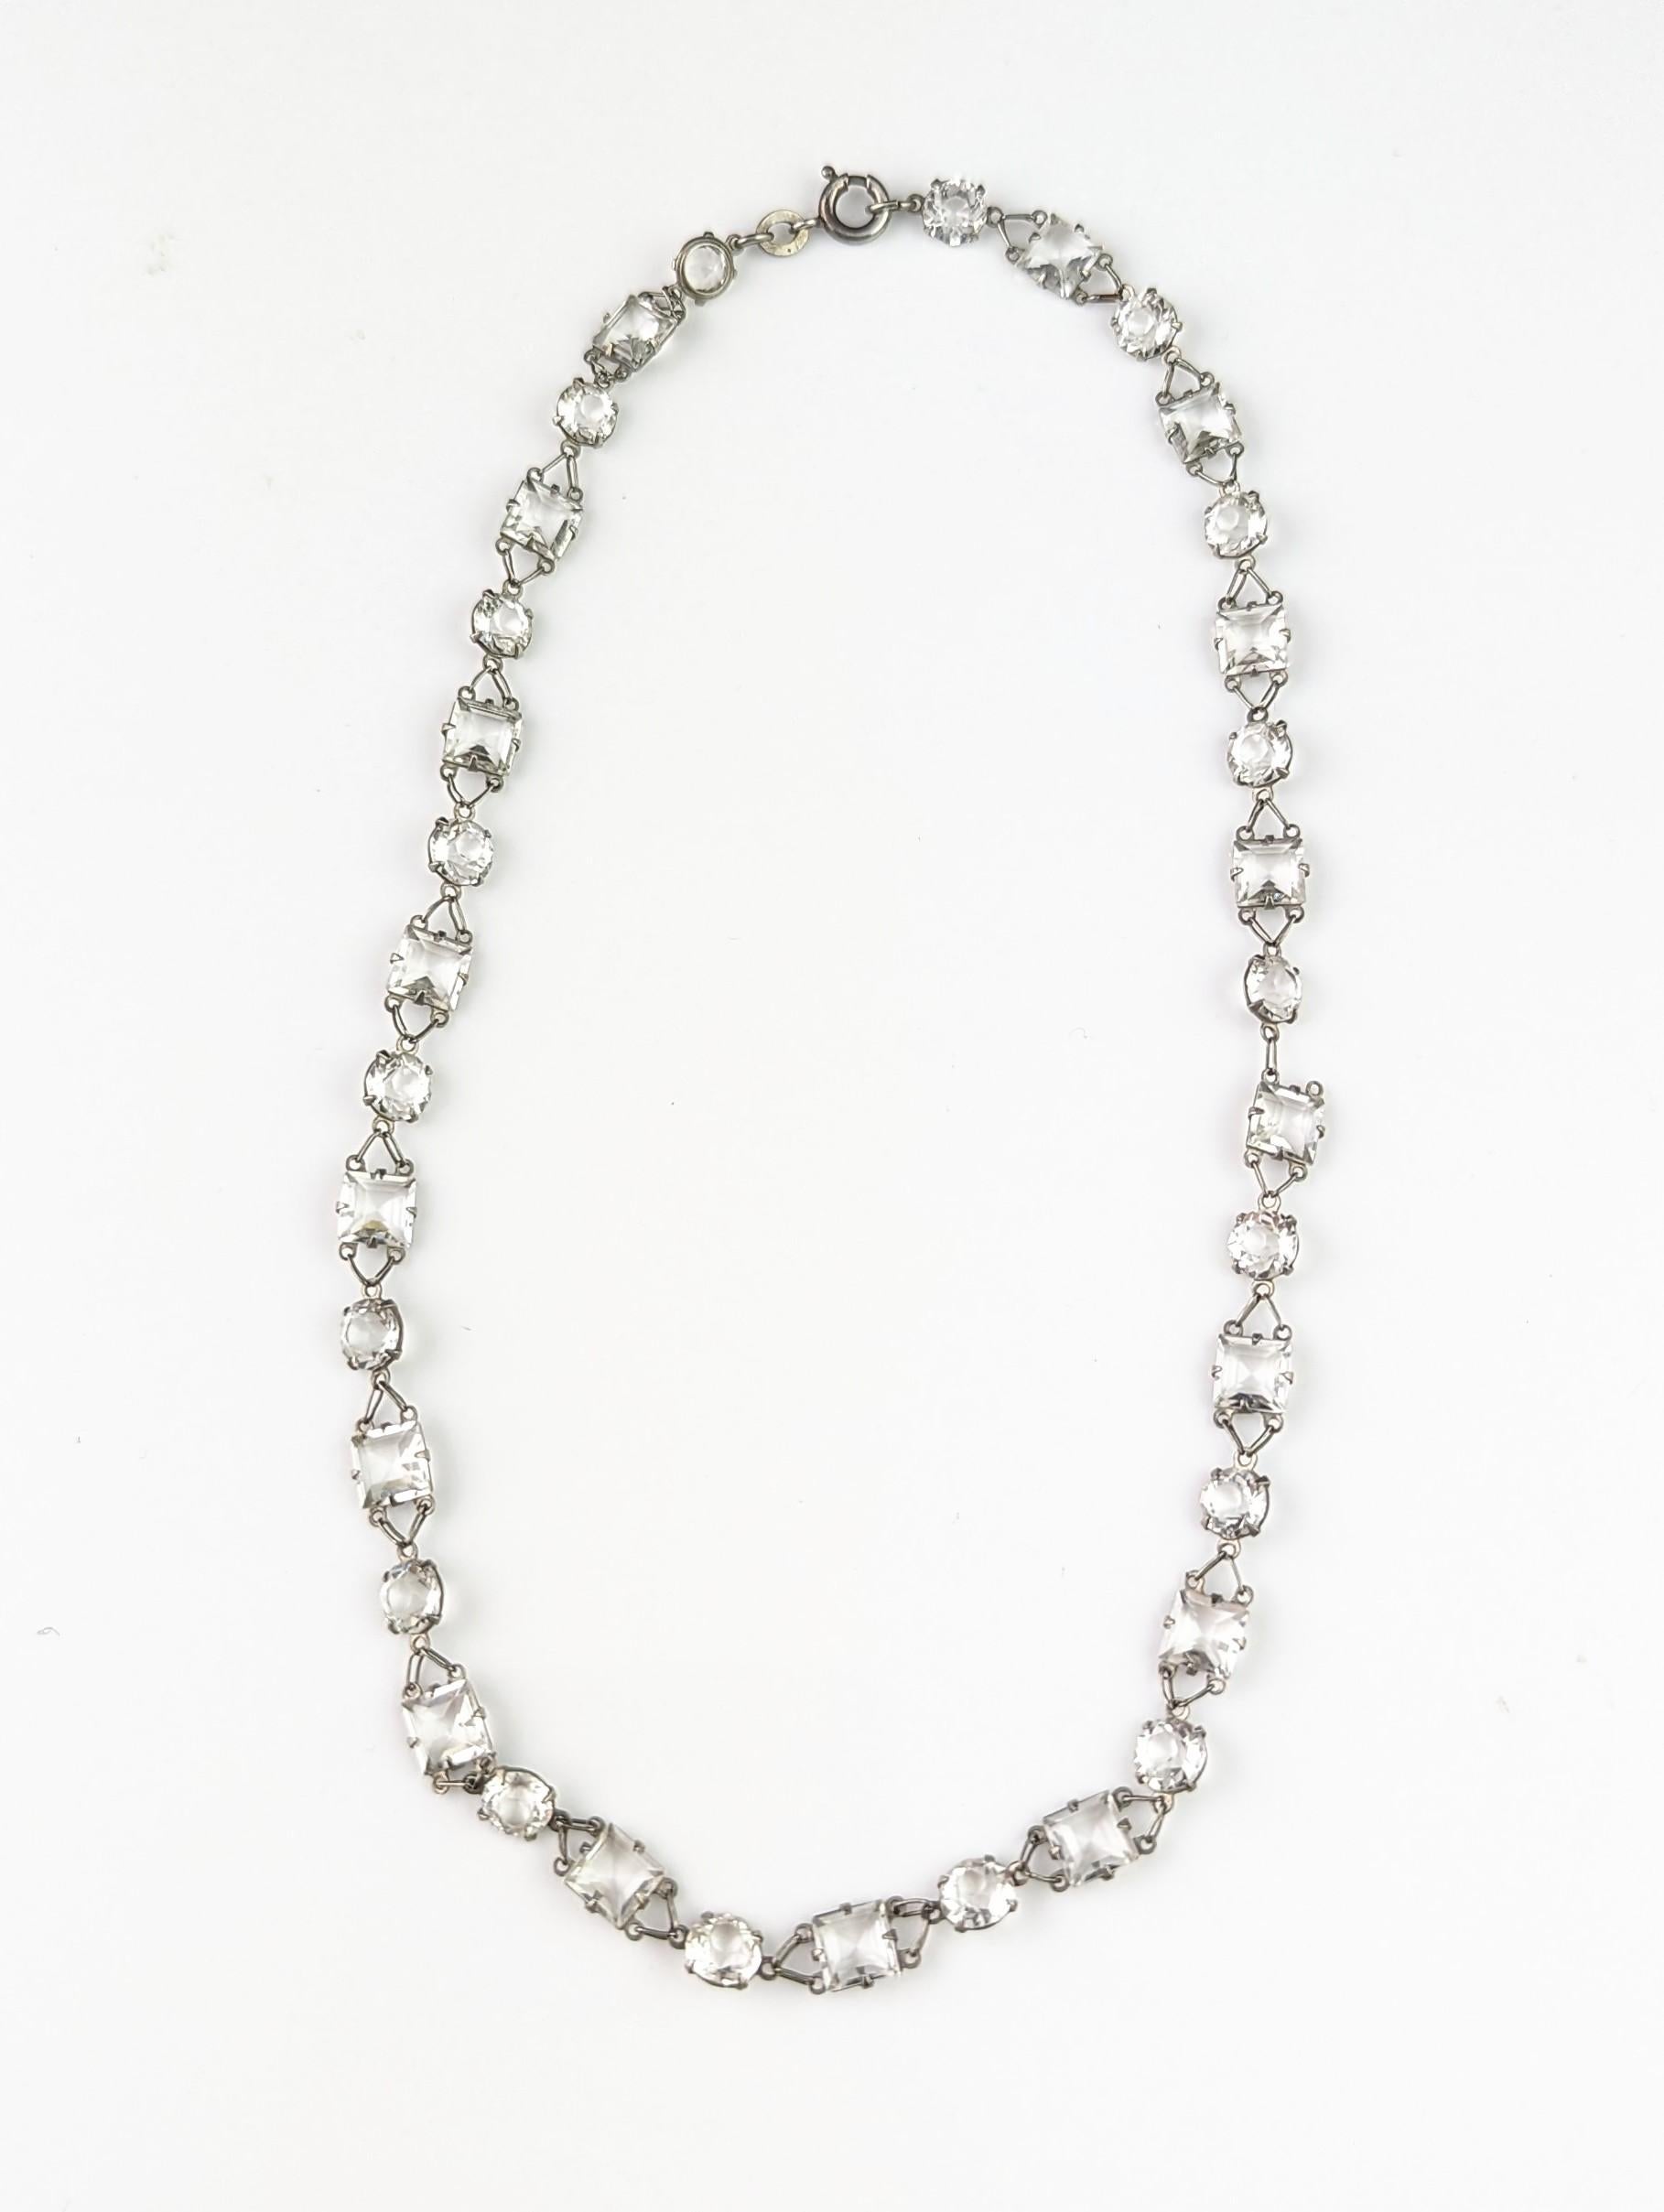 Vintage paste Riviere necklace, 800 silver, c1930s  For Sale 7